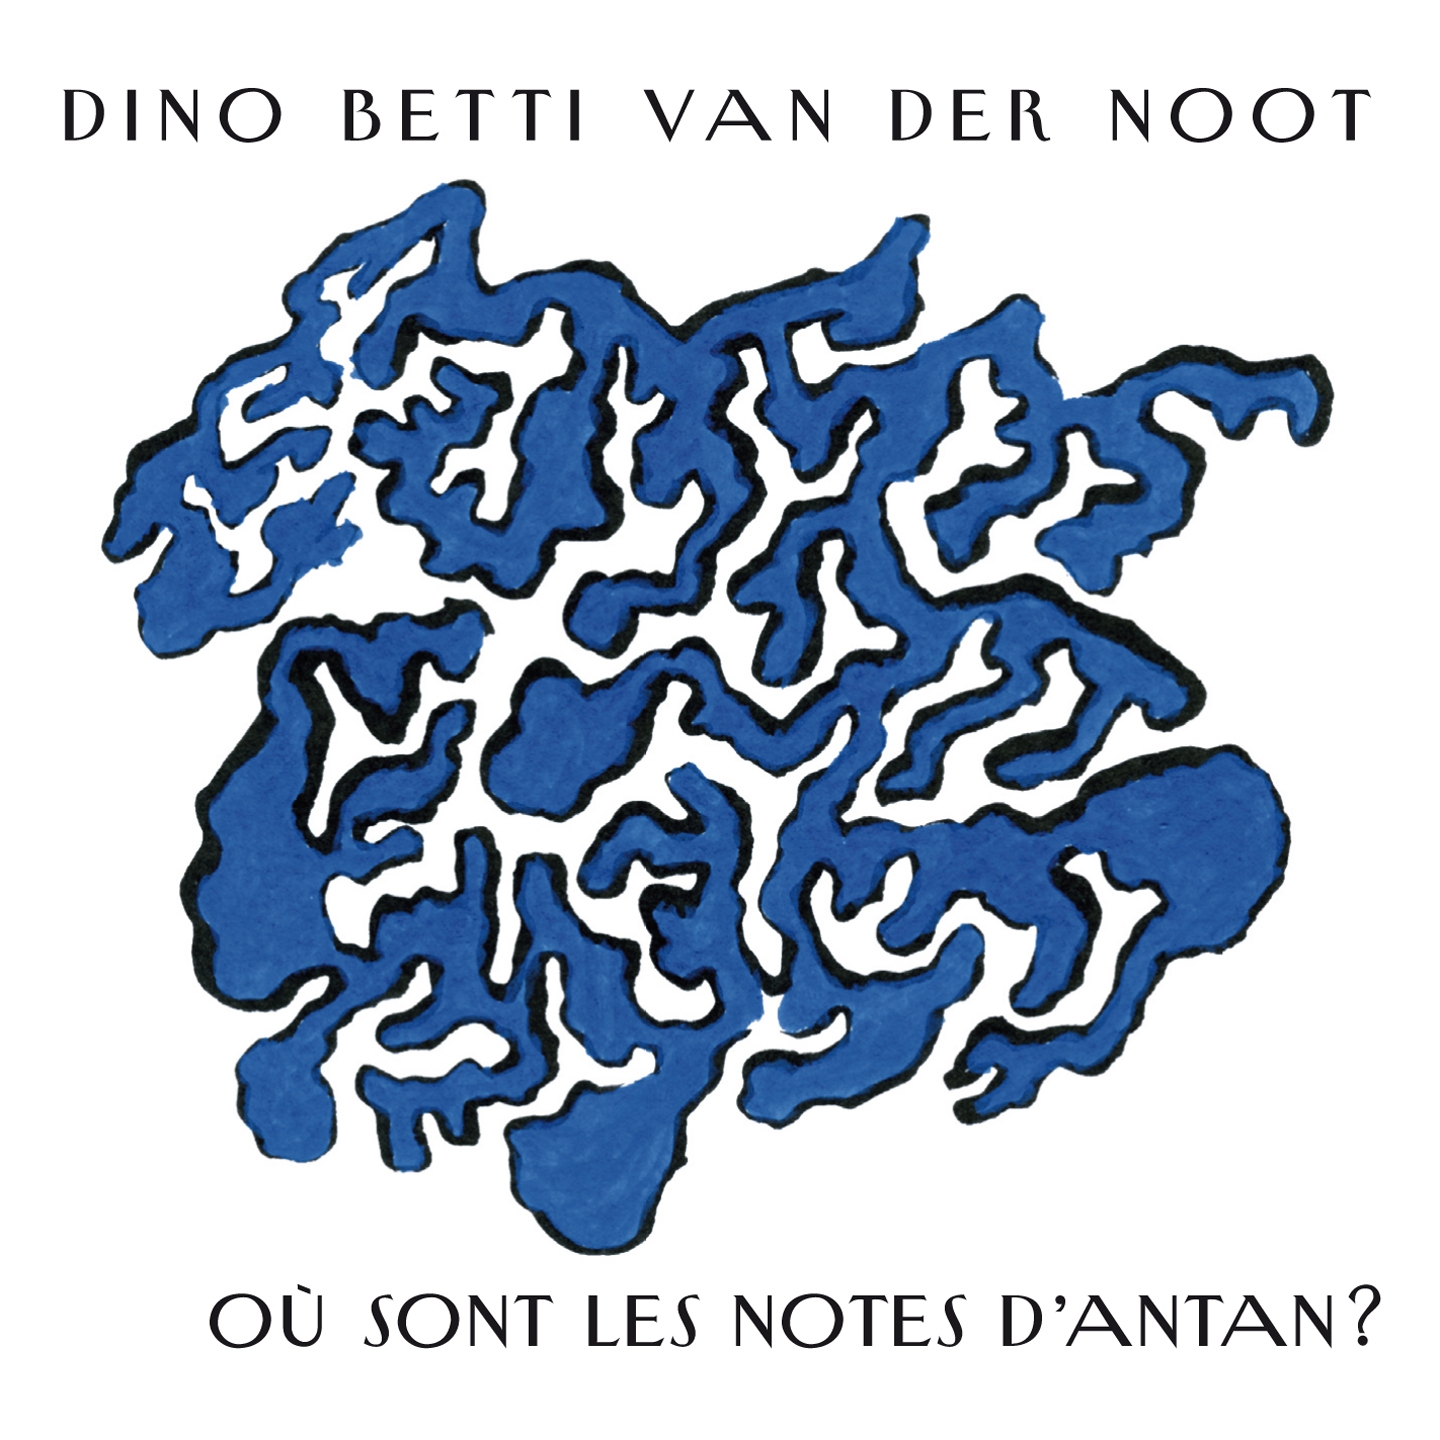 Dino Betti Van Der Noot: Ou sont les notes d' antan ?